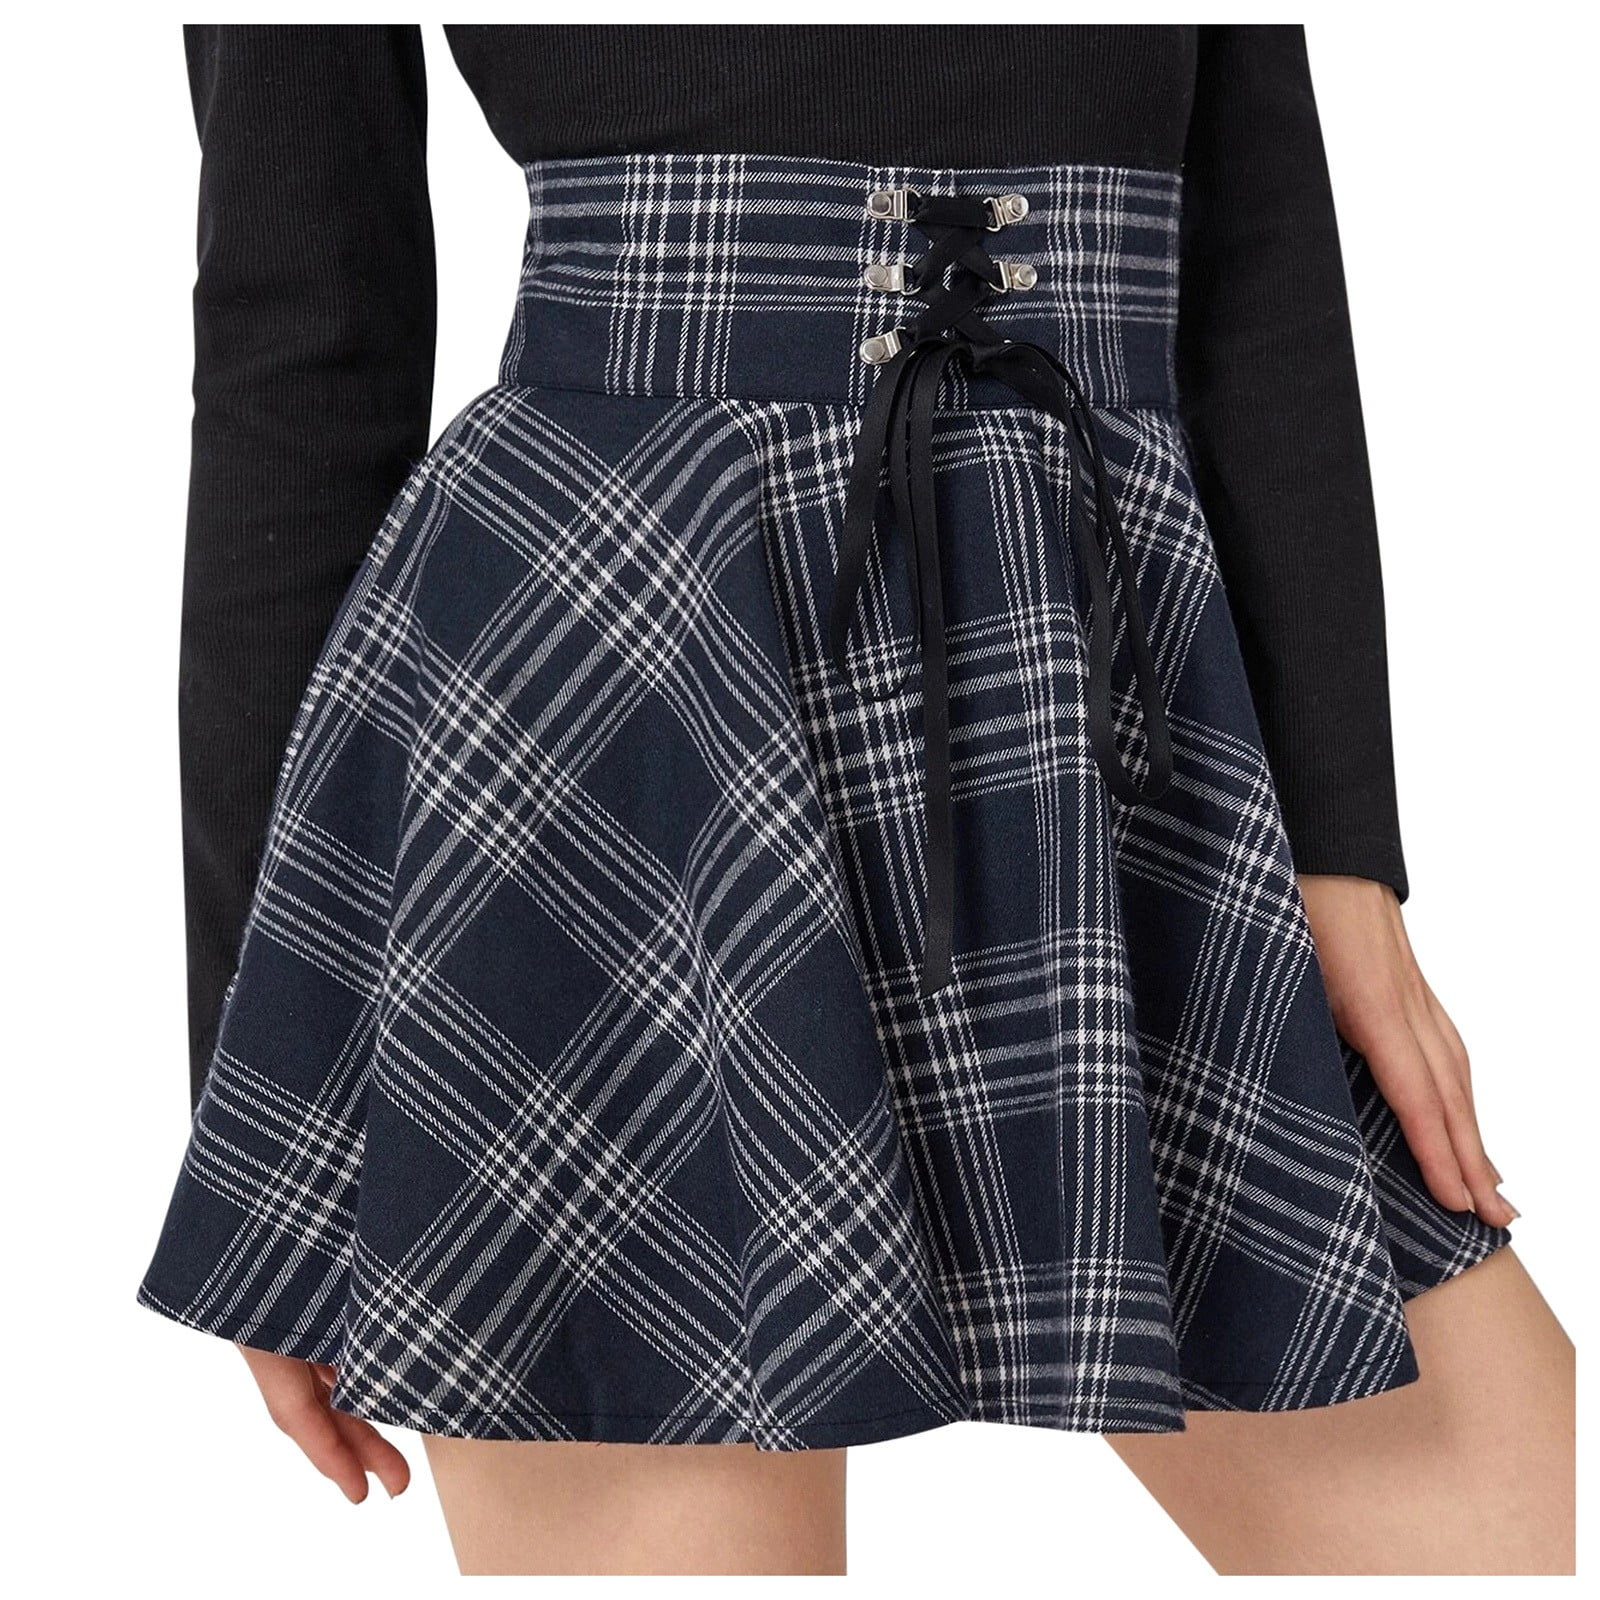 Tartan Skater Style Mini  Skirt   s/m m/l 